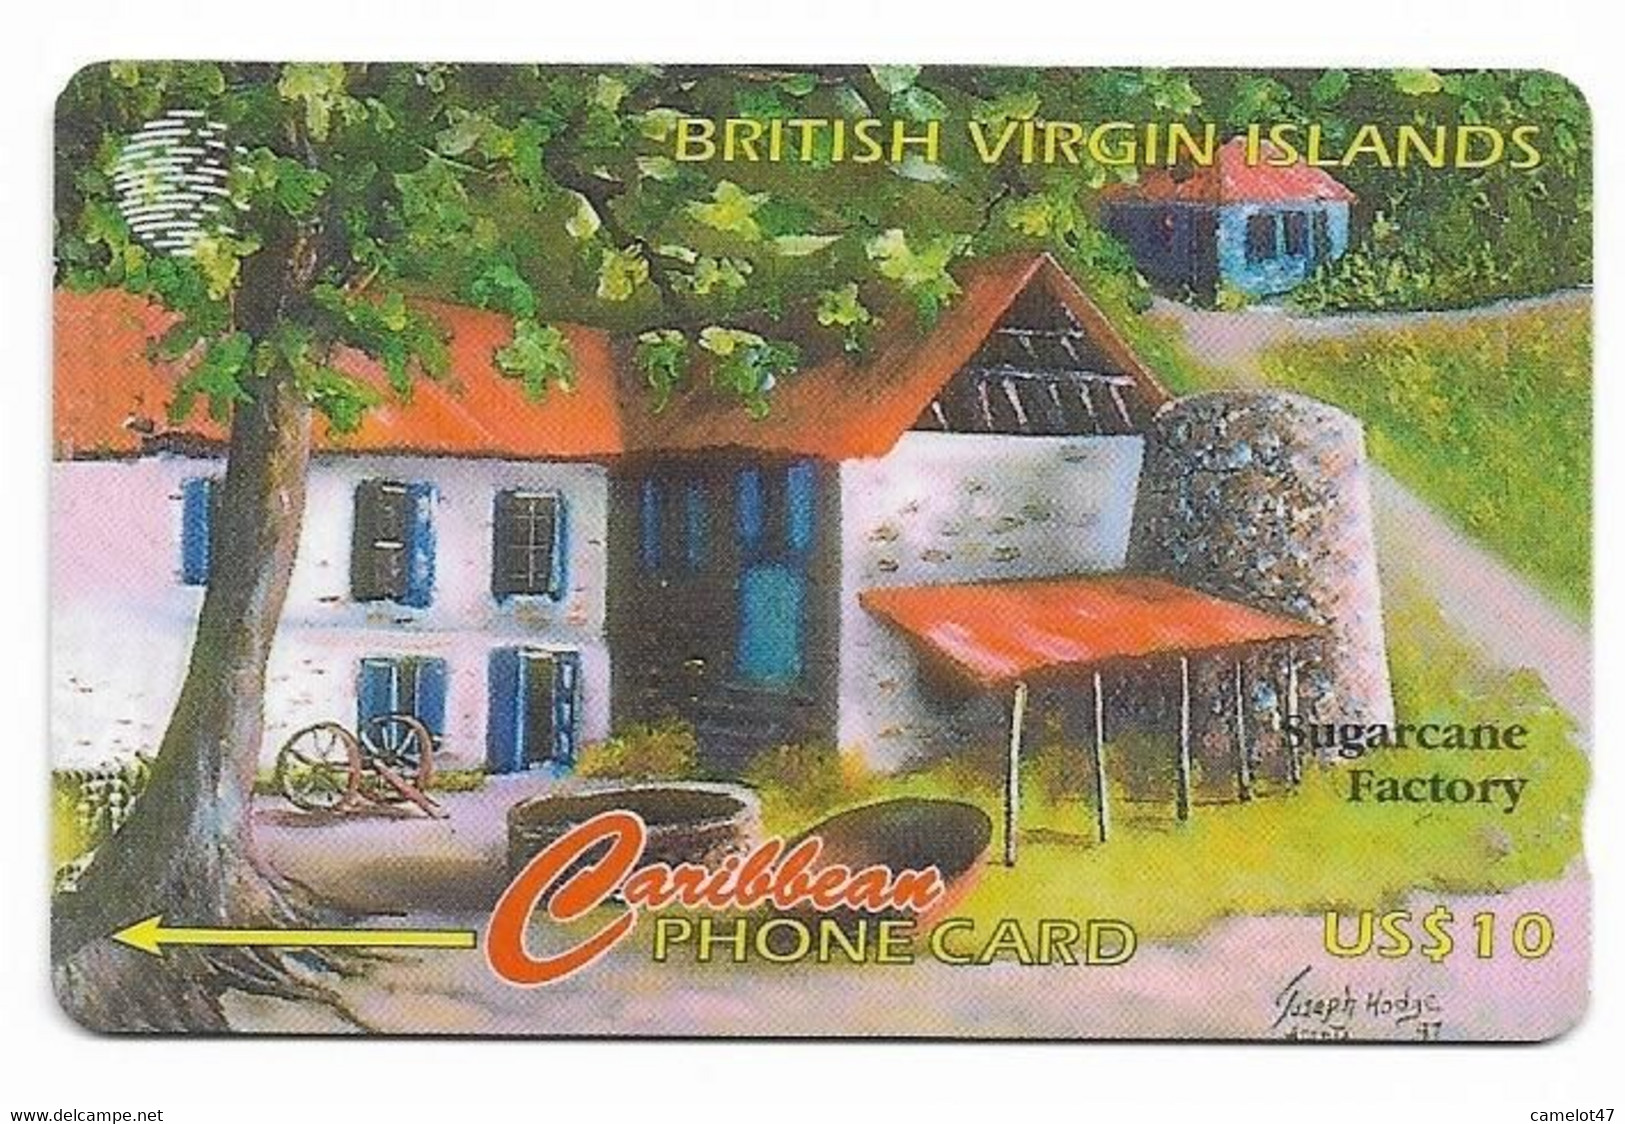 British Virgin Islands, Caribbean, Used Phonecard, No Value, Collectors Item, # Bvi-5  Shows Wear - Virgin Islands